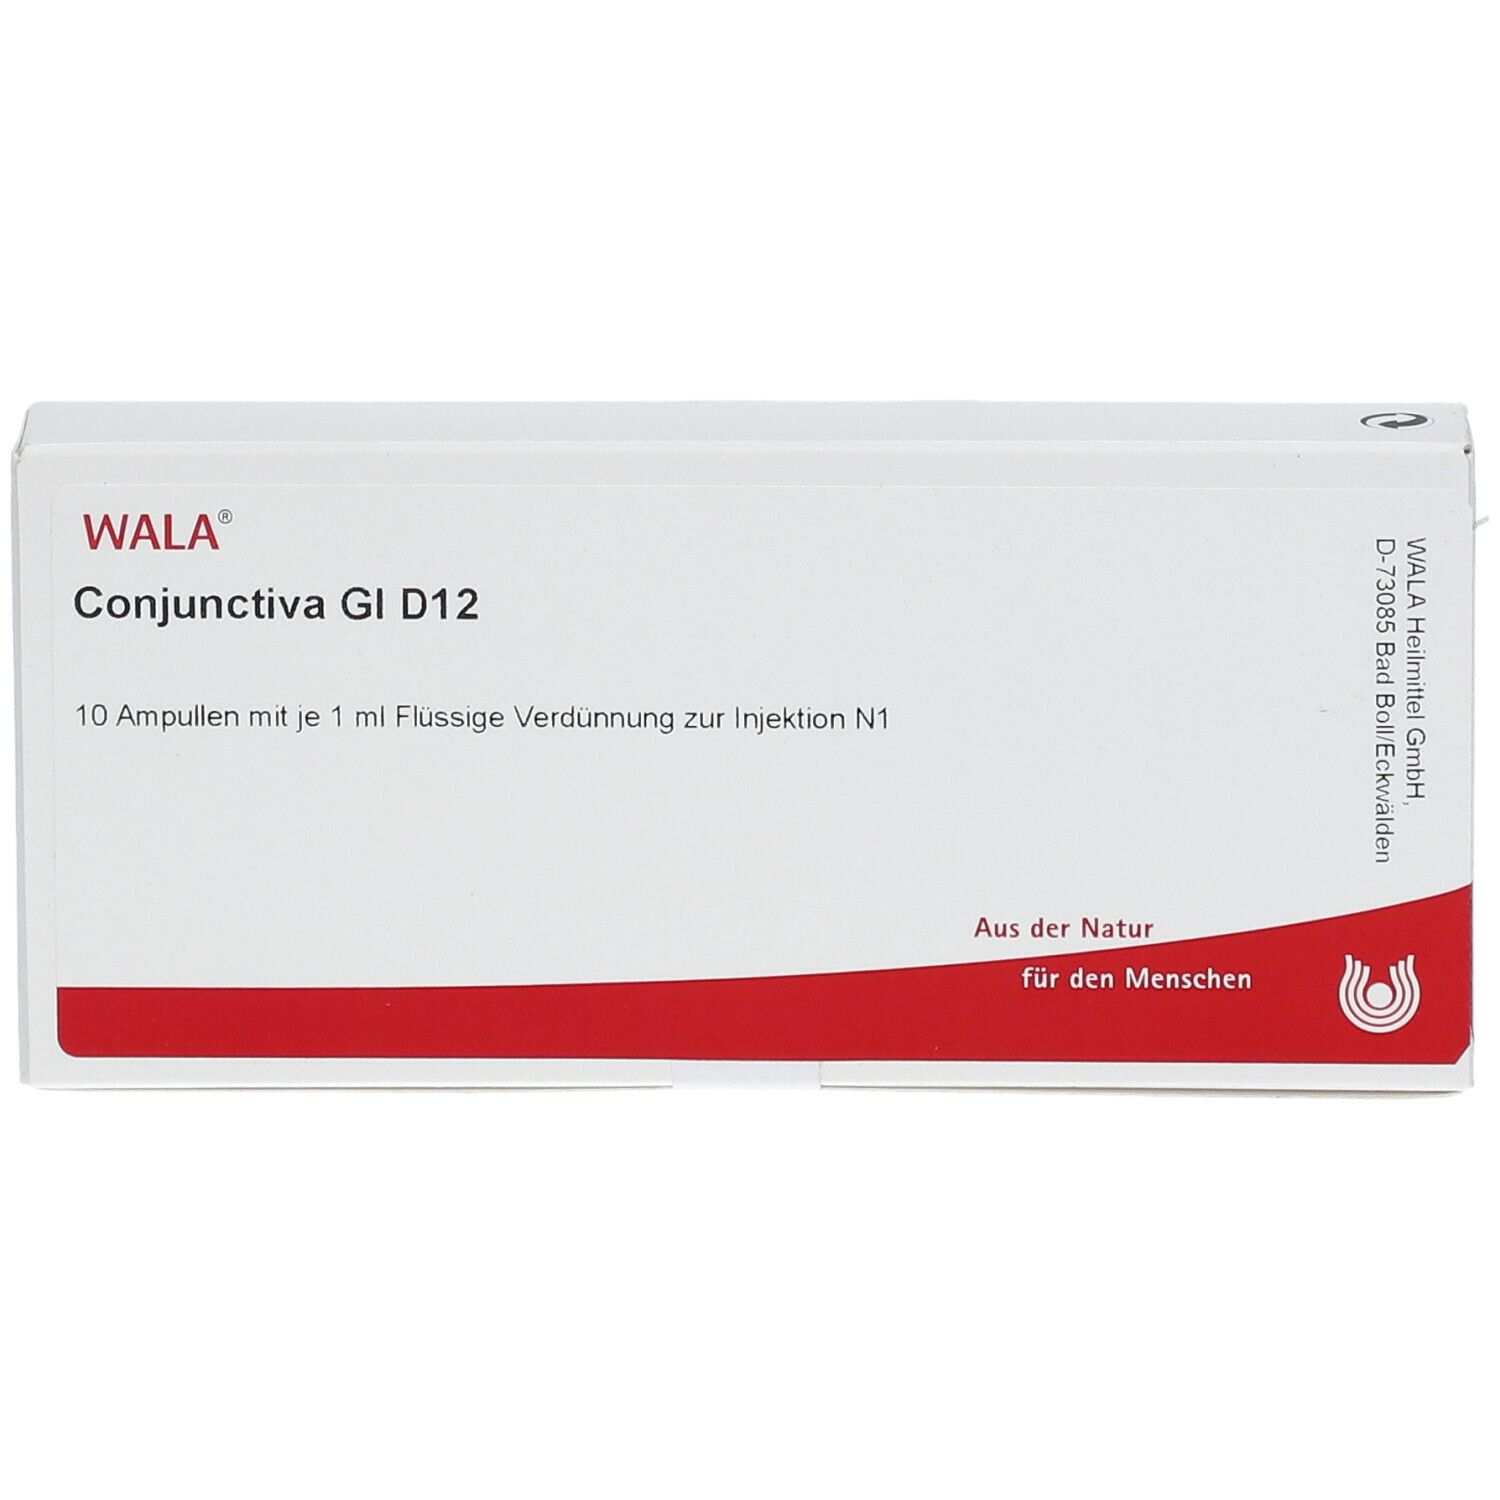 WALA® Conjunctiva Gl D 12